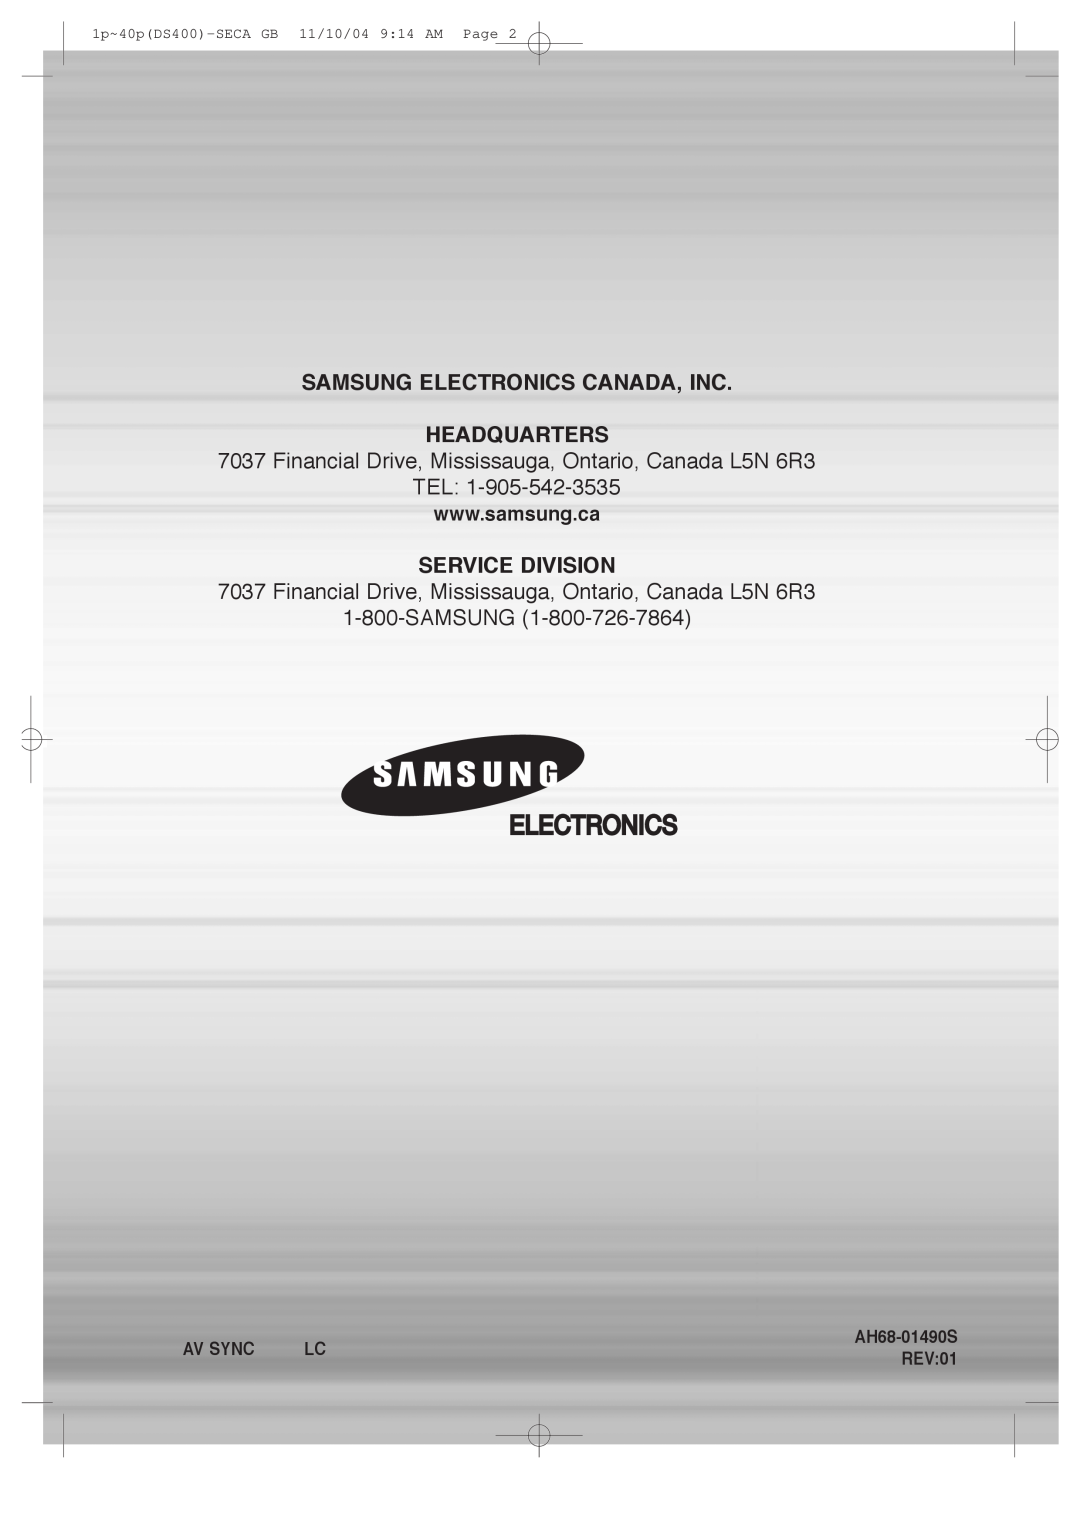 Samsung HT-DS400 Samsung Electronics Canada, Inc Headquarters, Tel, Service Division, Av Sync, REV:01, AH68-01490S 